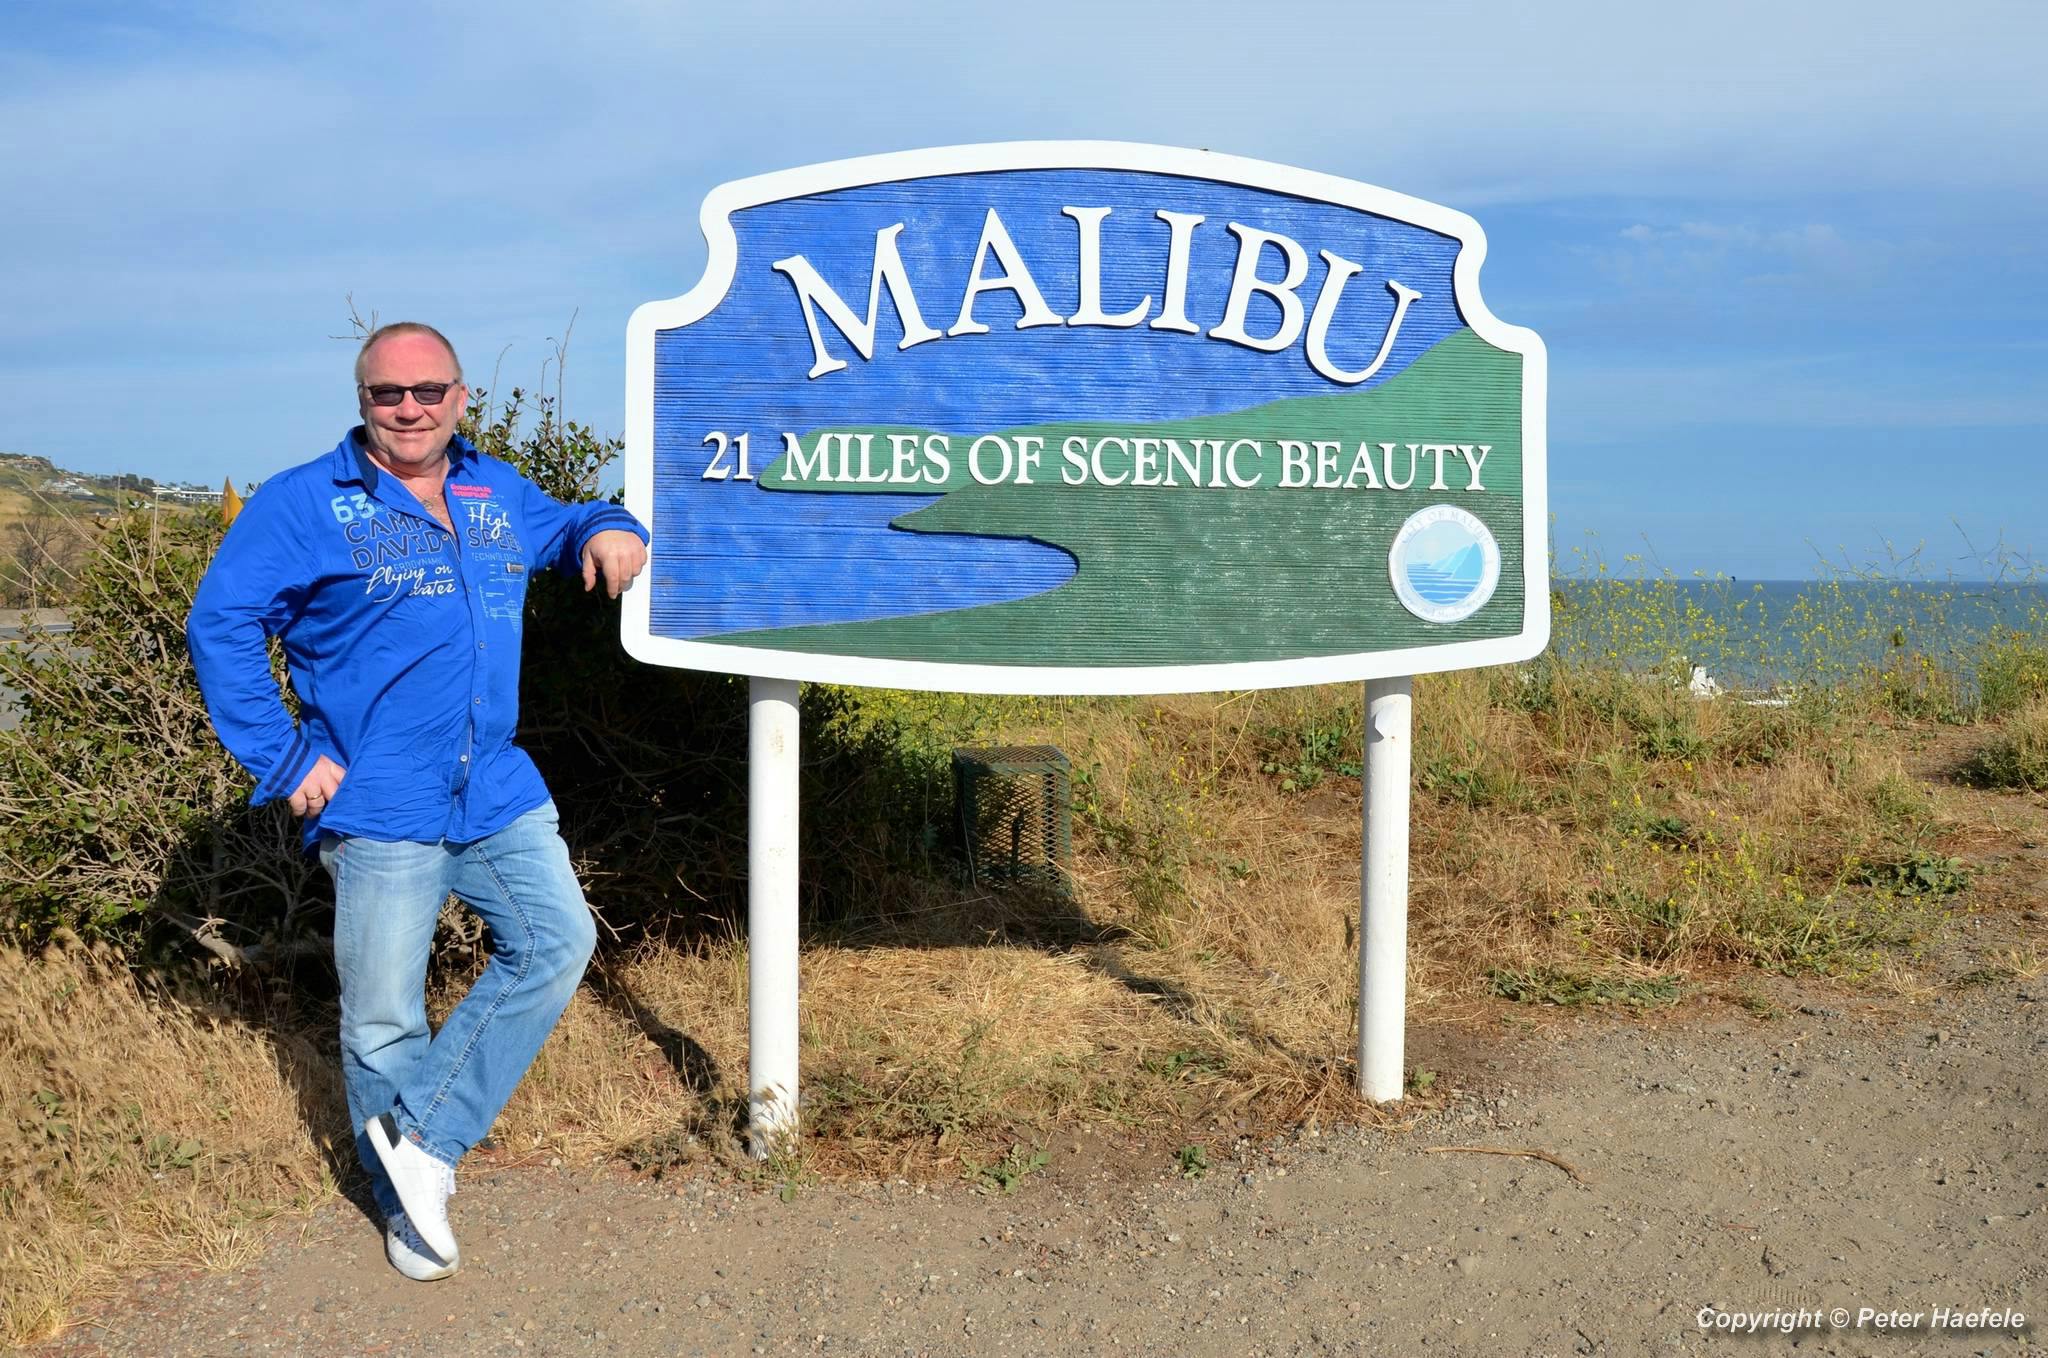 Roadtrip USA - Malibu - 21 Miles of Scenic Beauty